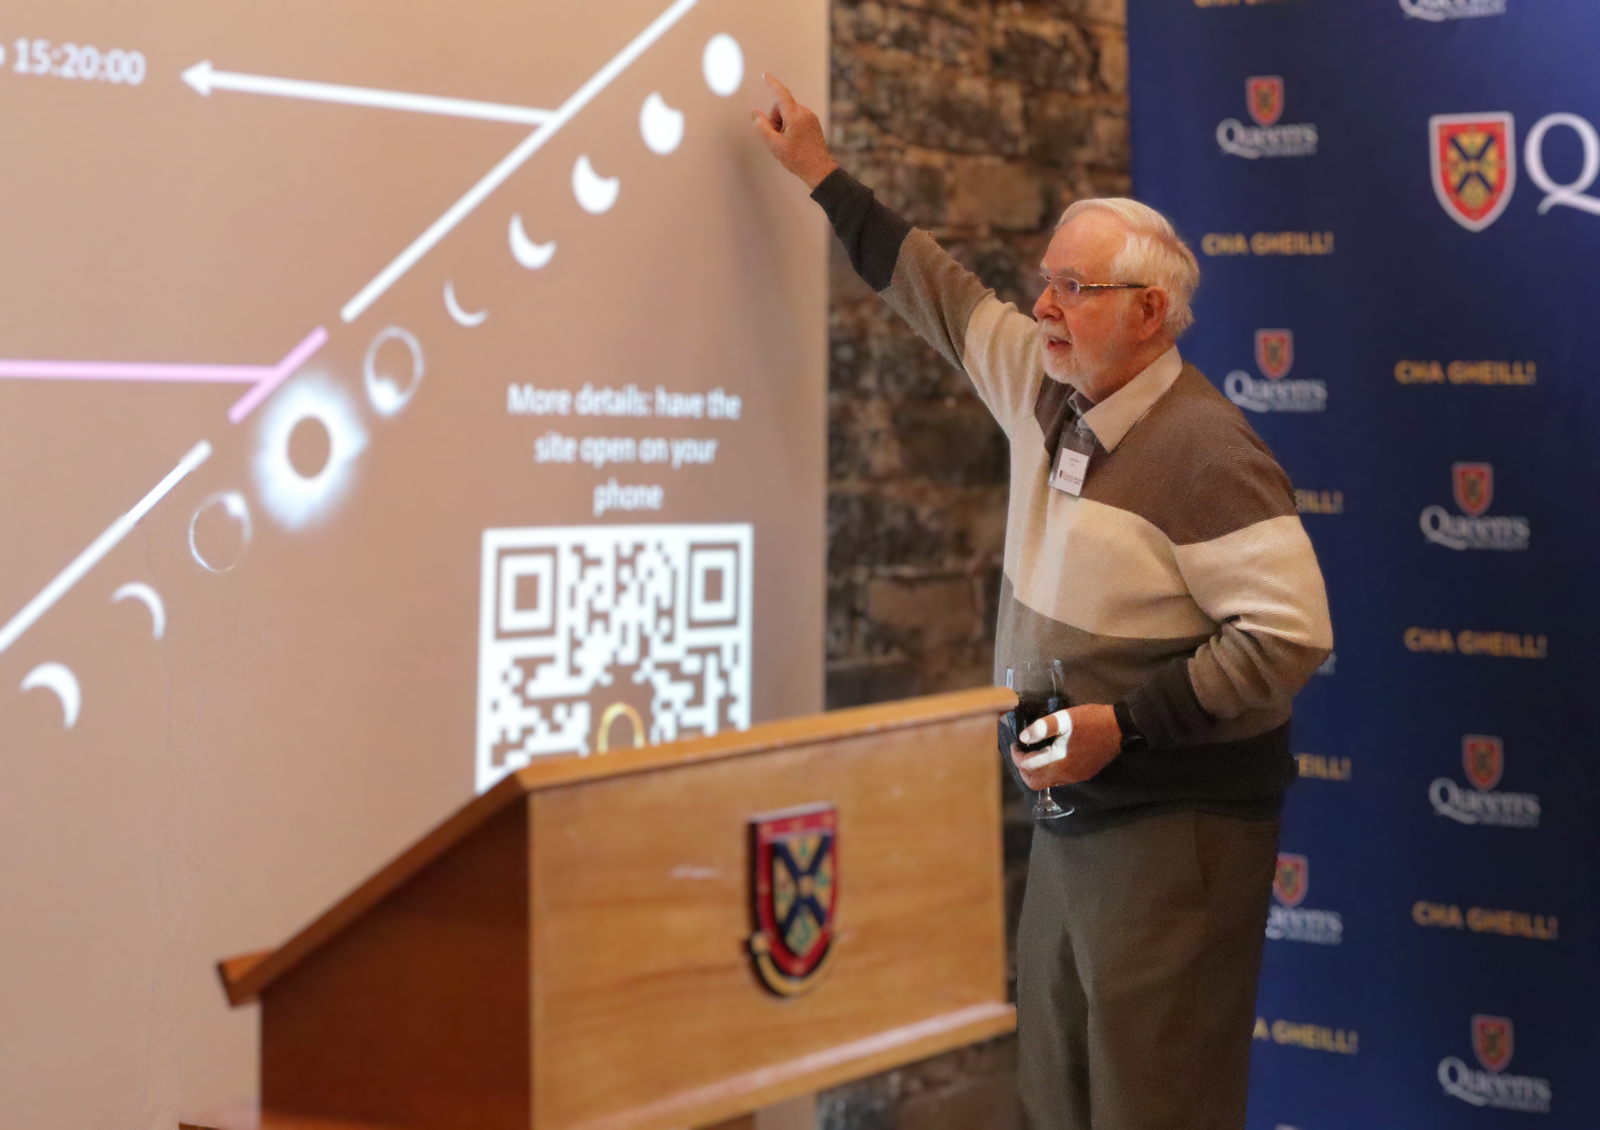 Dr Art McDonald speaking on the Solar Eclipse phenmomenon